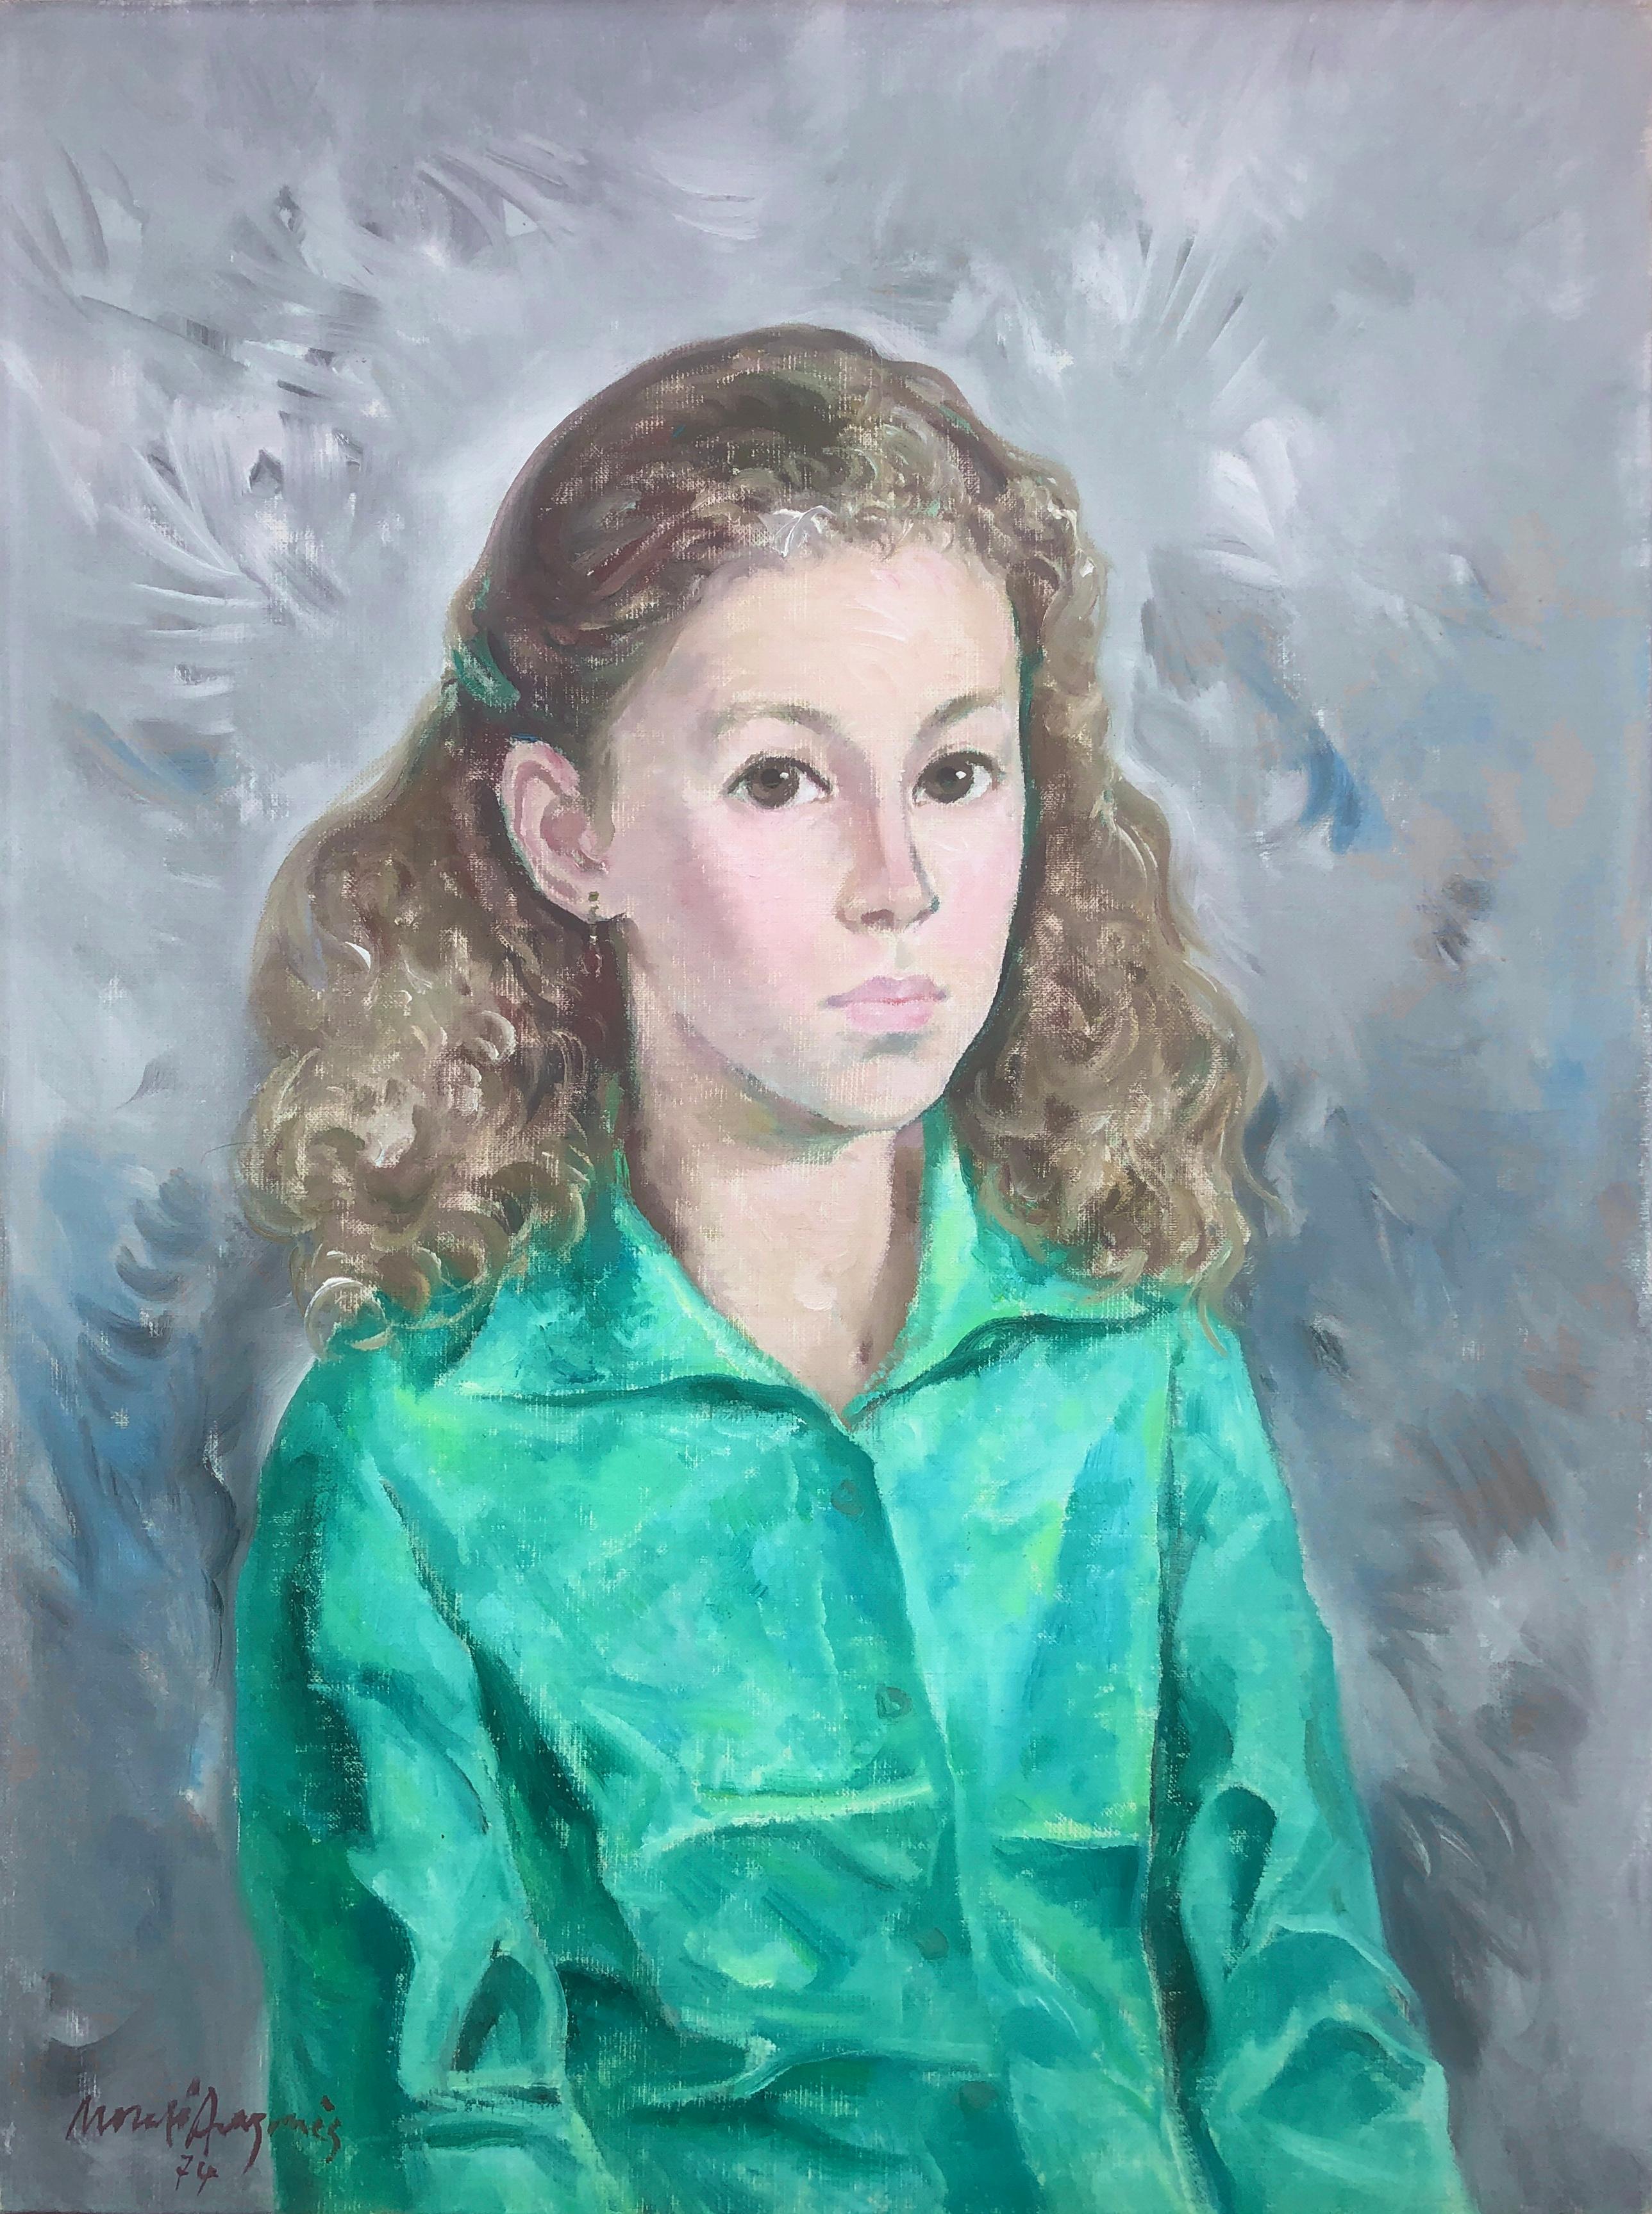 Josep Maria Morato Aragones Portrait Painting - Young girl portrait oil on canvas painting